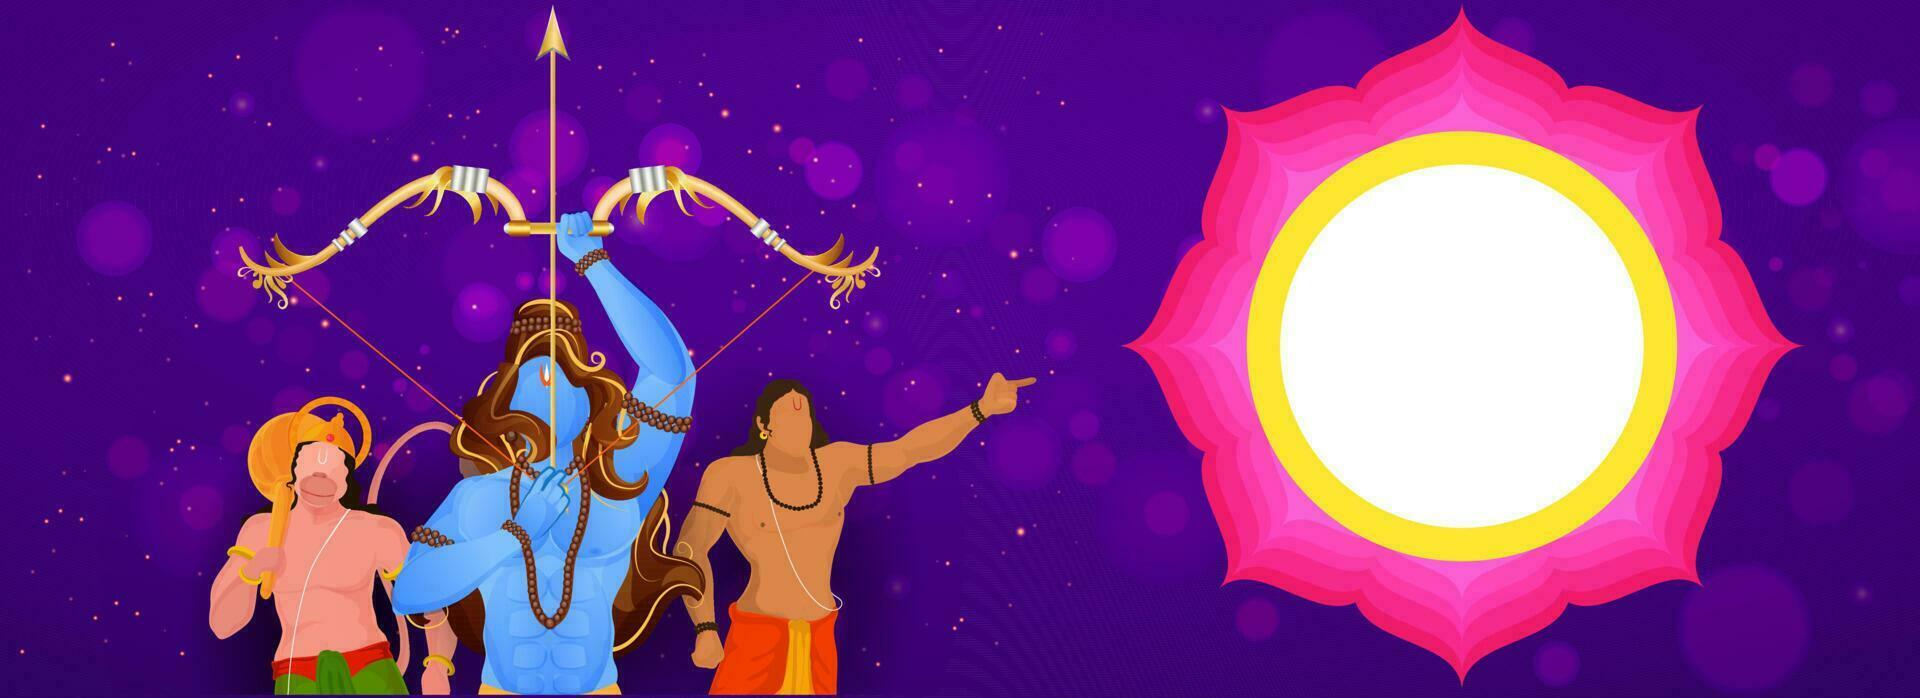 Hindu Mythologie Herr Rama nehmen ein Ziel mit Hanuman, Lakshman Charakter und leeren Mandala Rahmen auf lila Bokeh Hintergrund. vektor